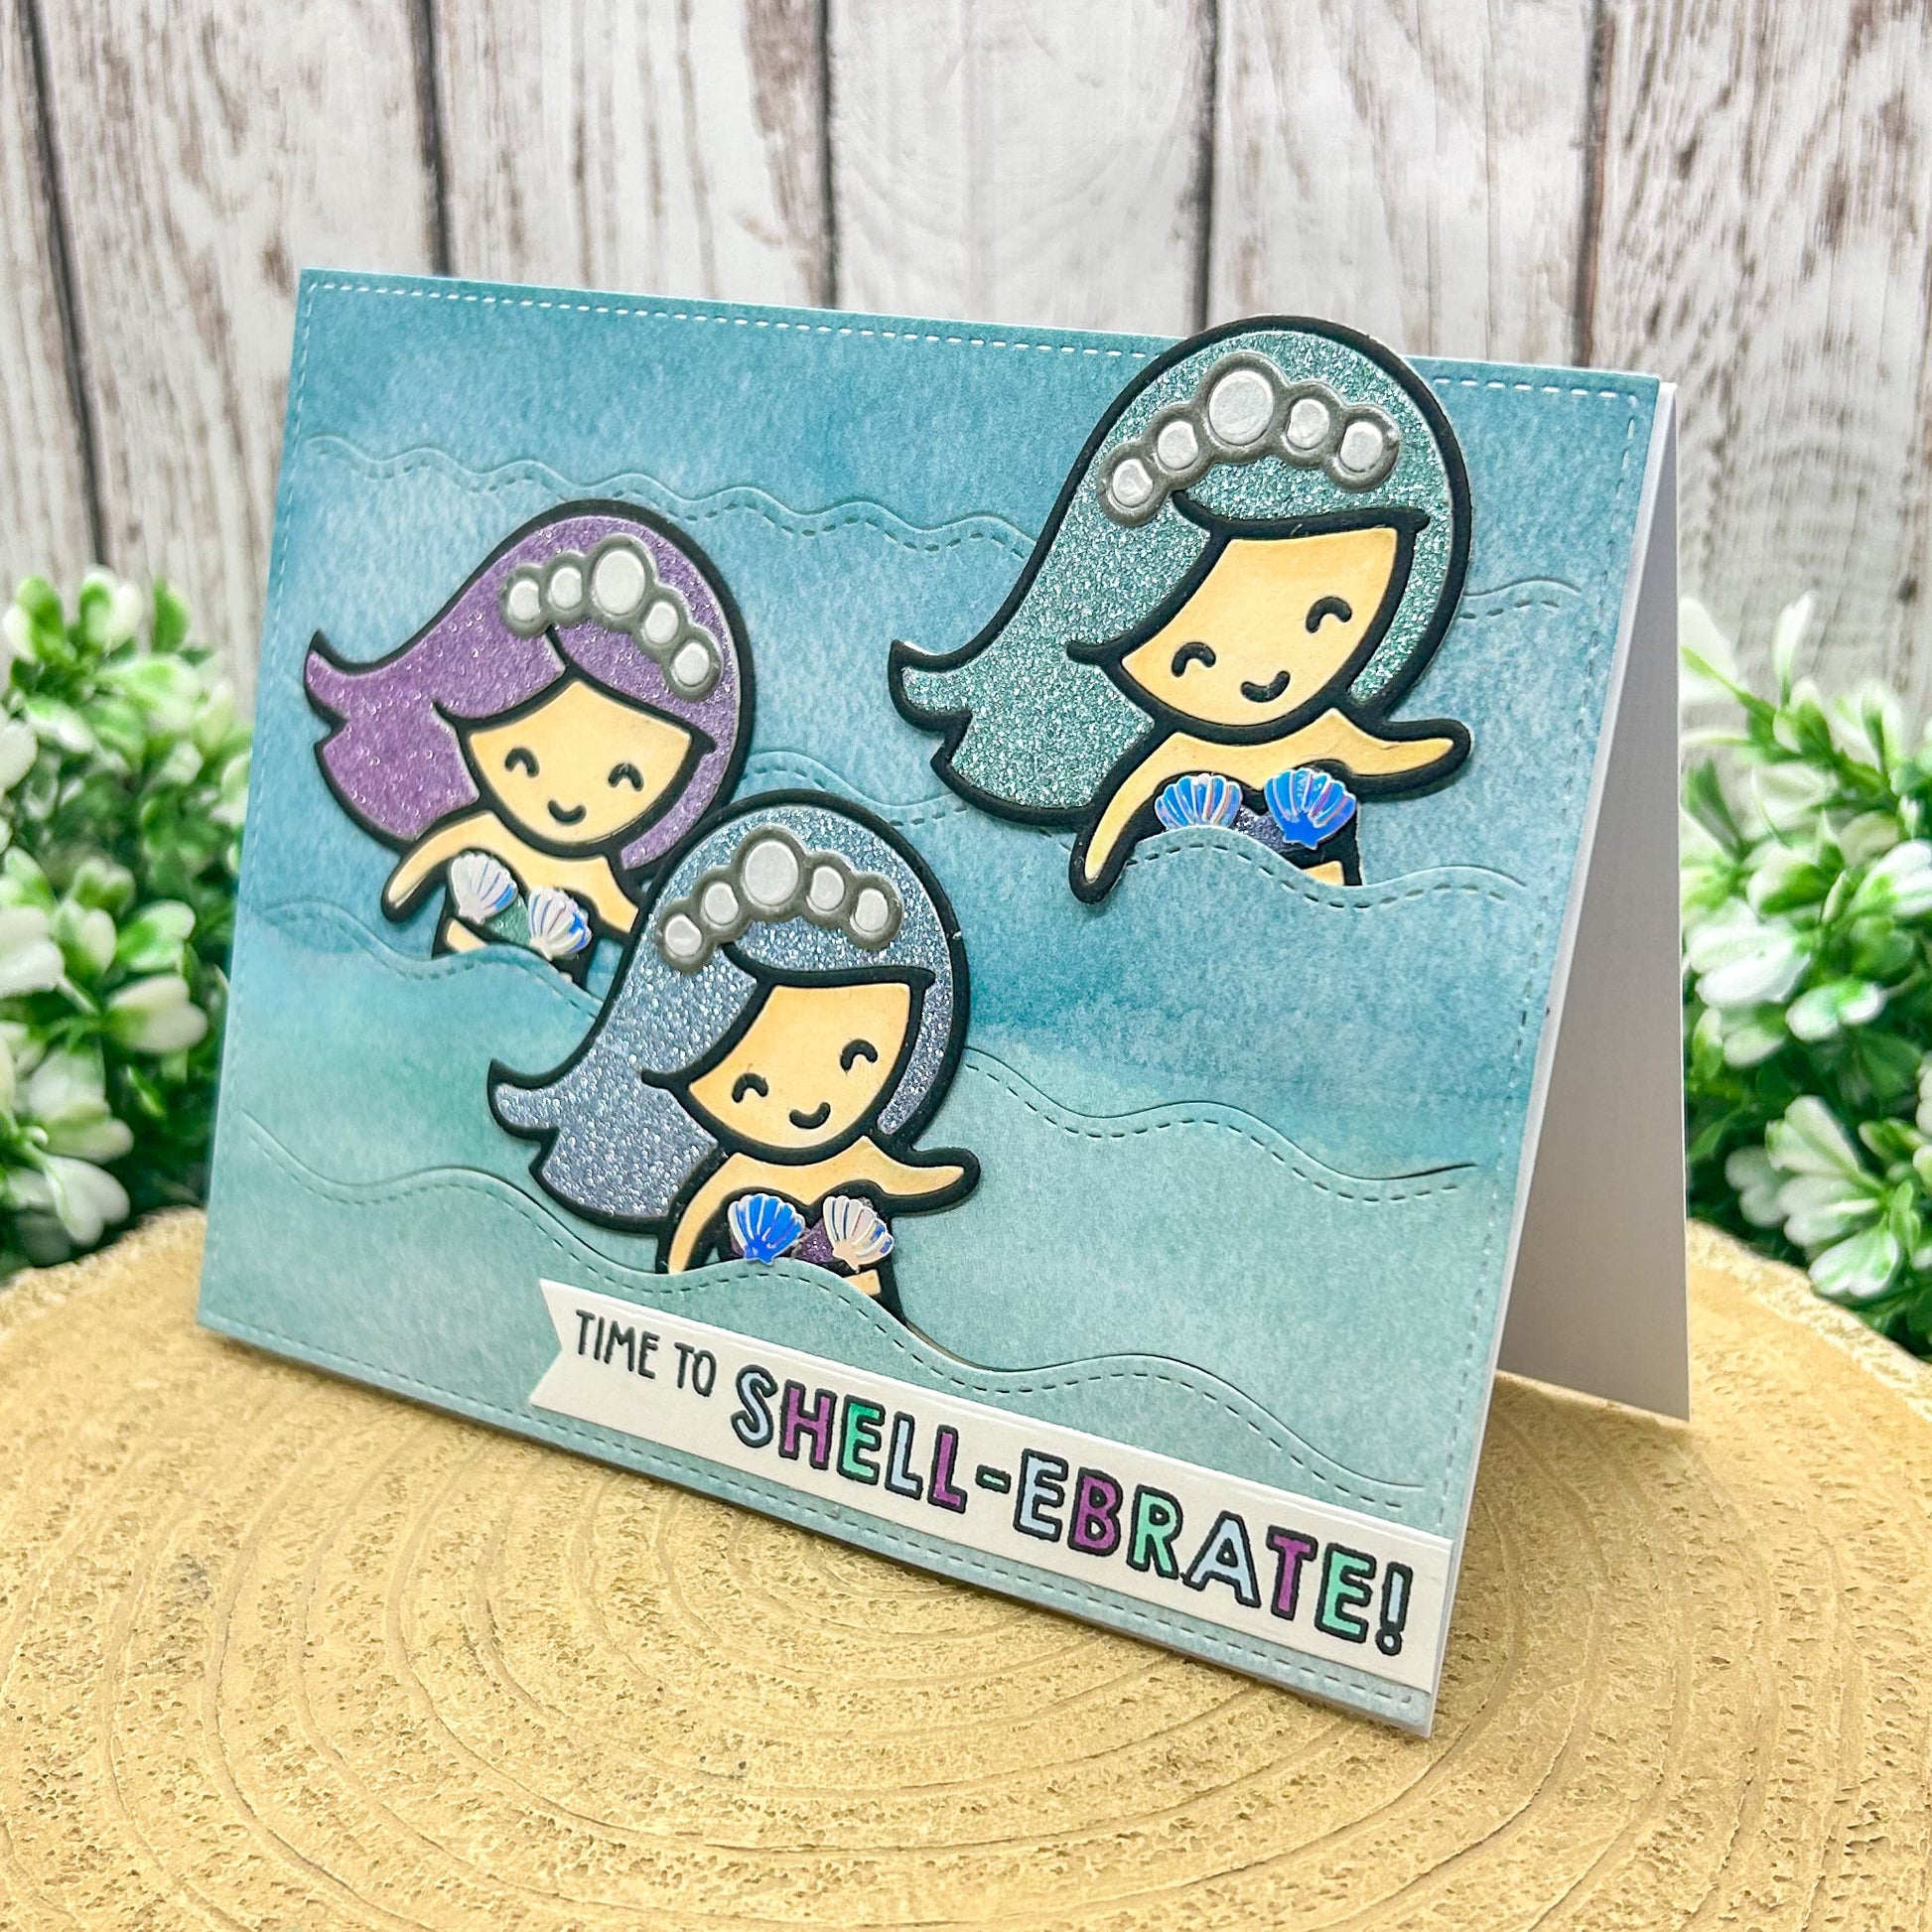 Time To Shell-ebrate! Mermaids Handmade Birthday Card-1